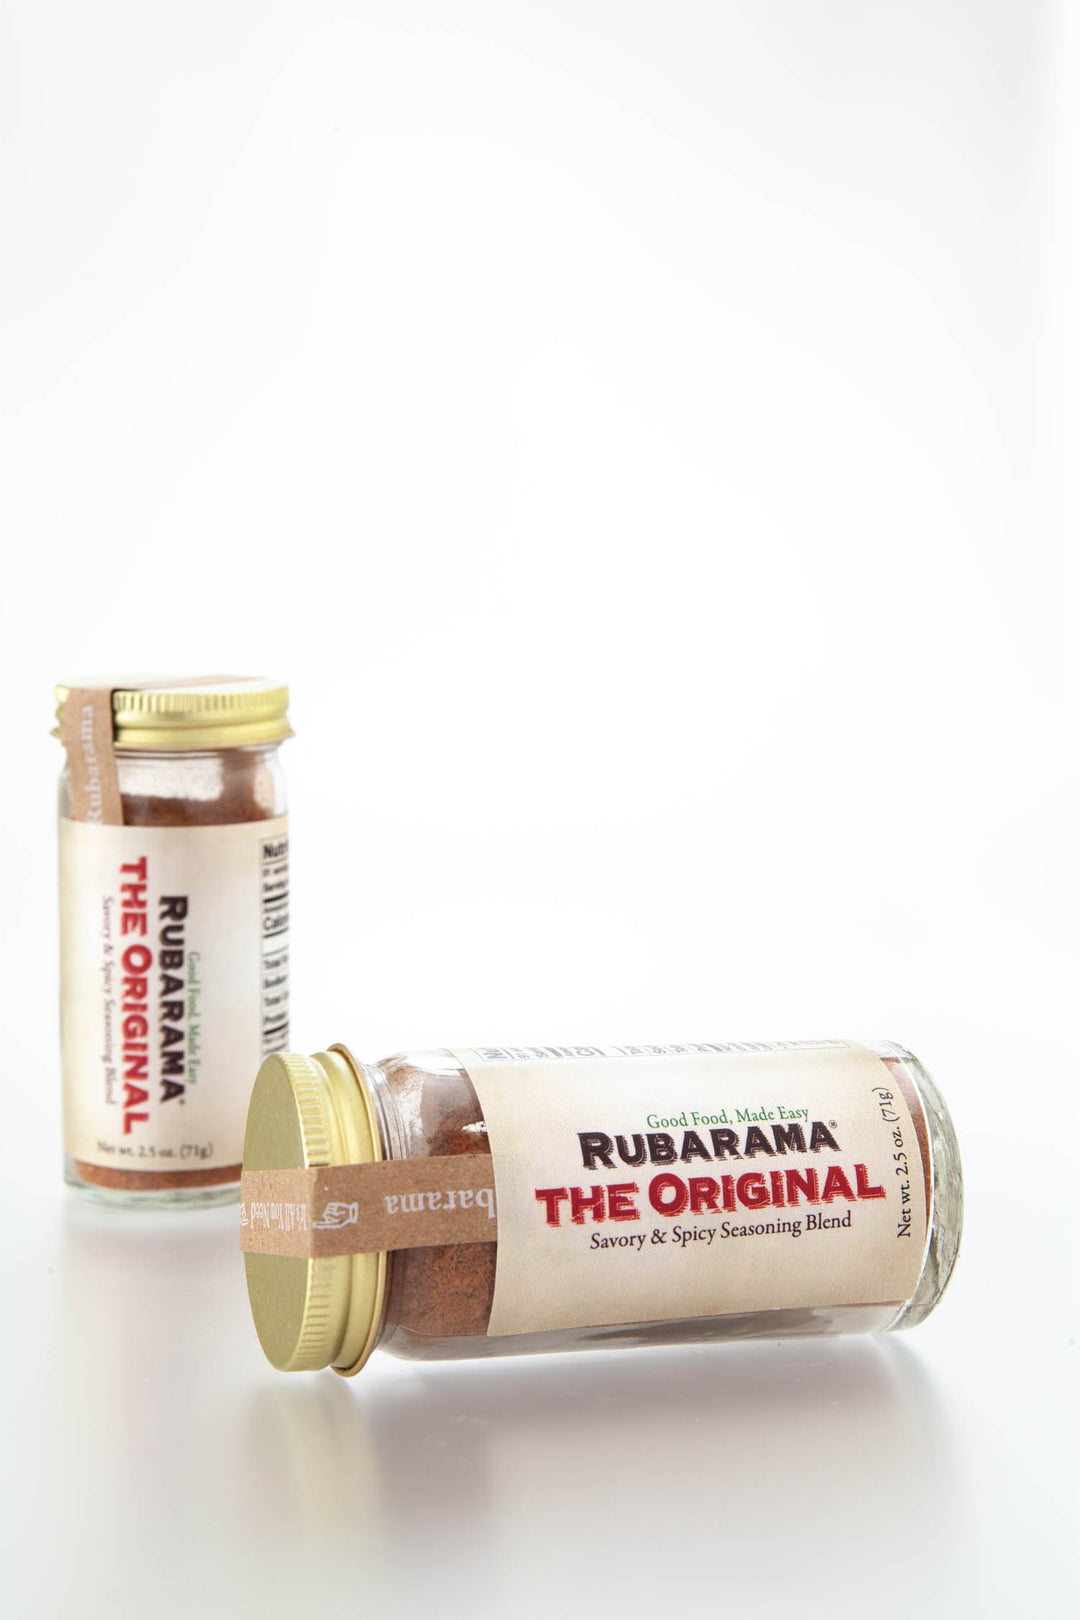 The Original Rubarama